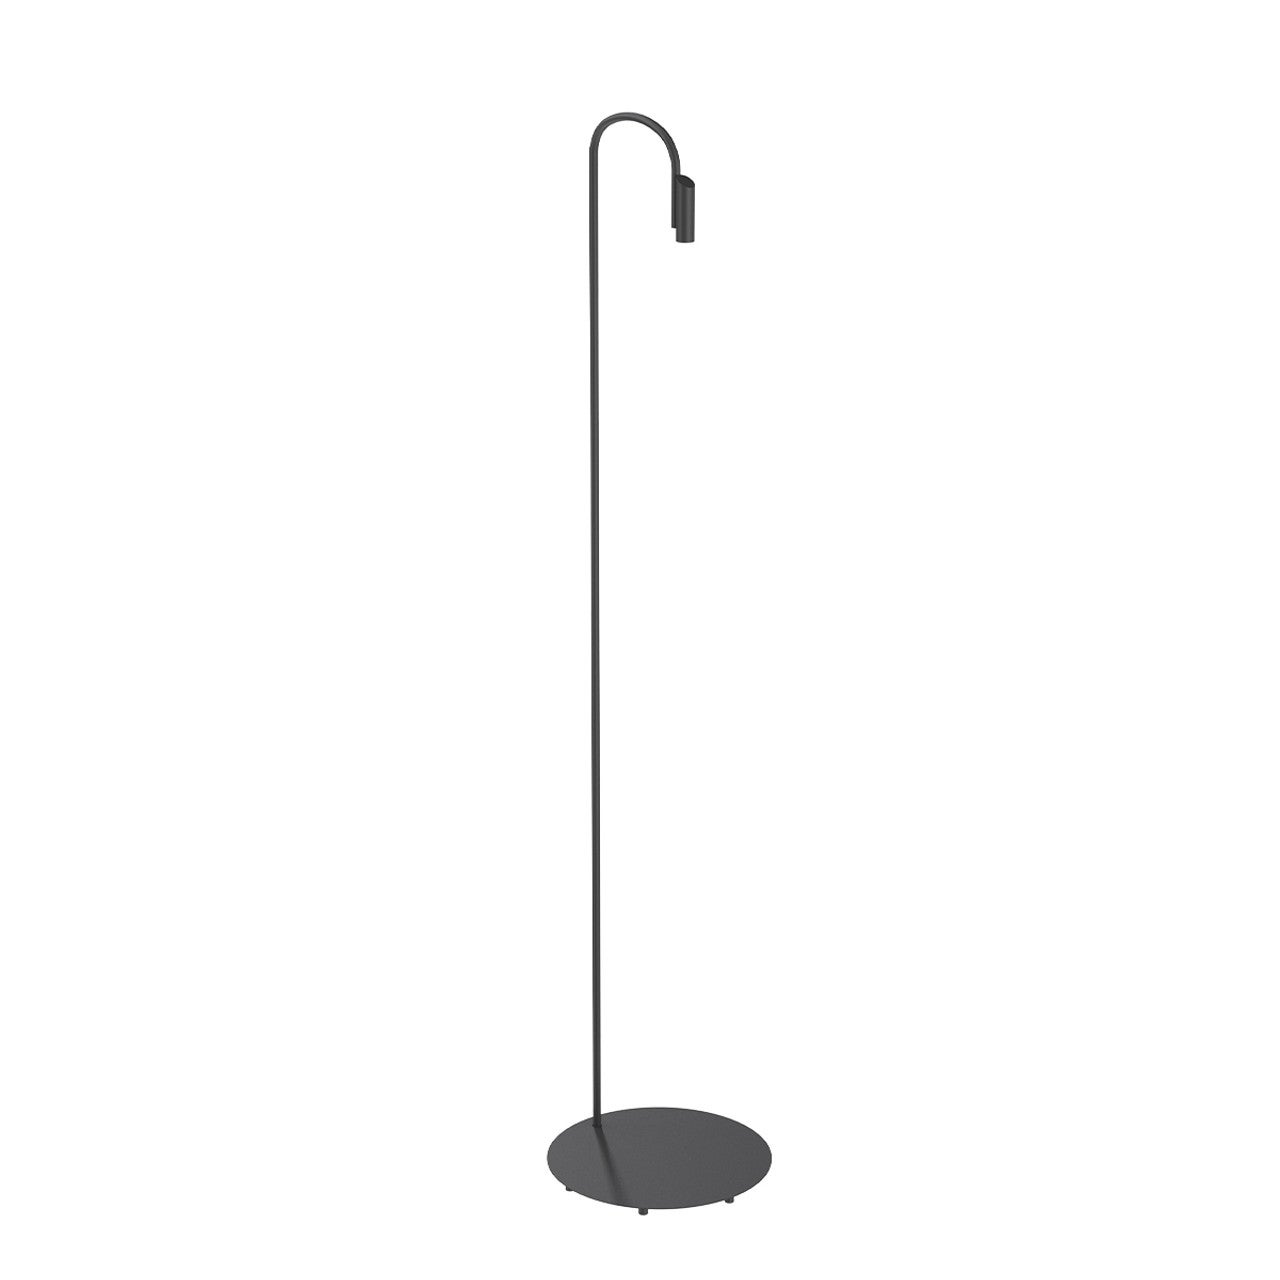 Flos Caule 2700K Model 5 Outdoor Floor Lamp in Deep Brown with Regular Shade For Sale